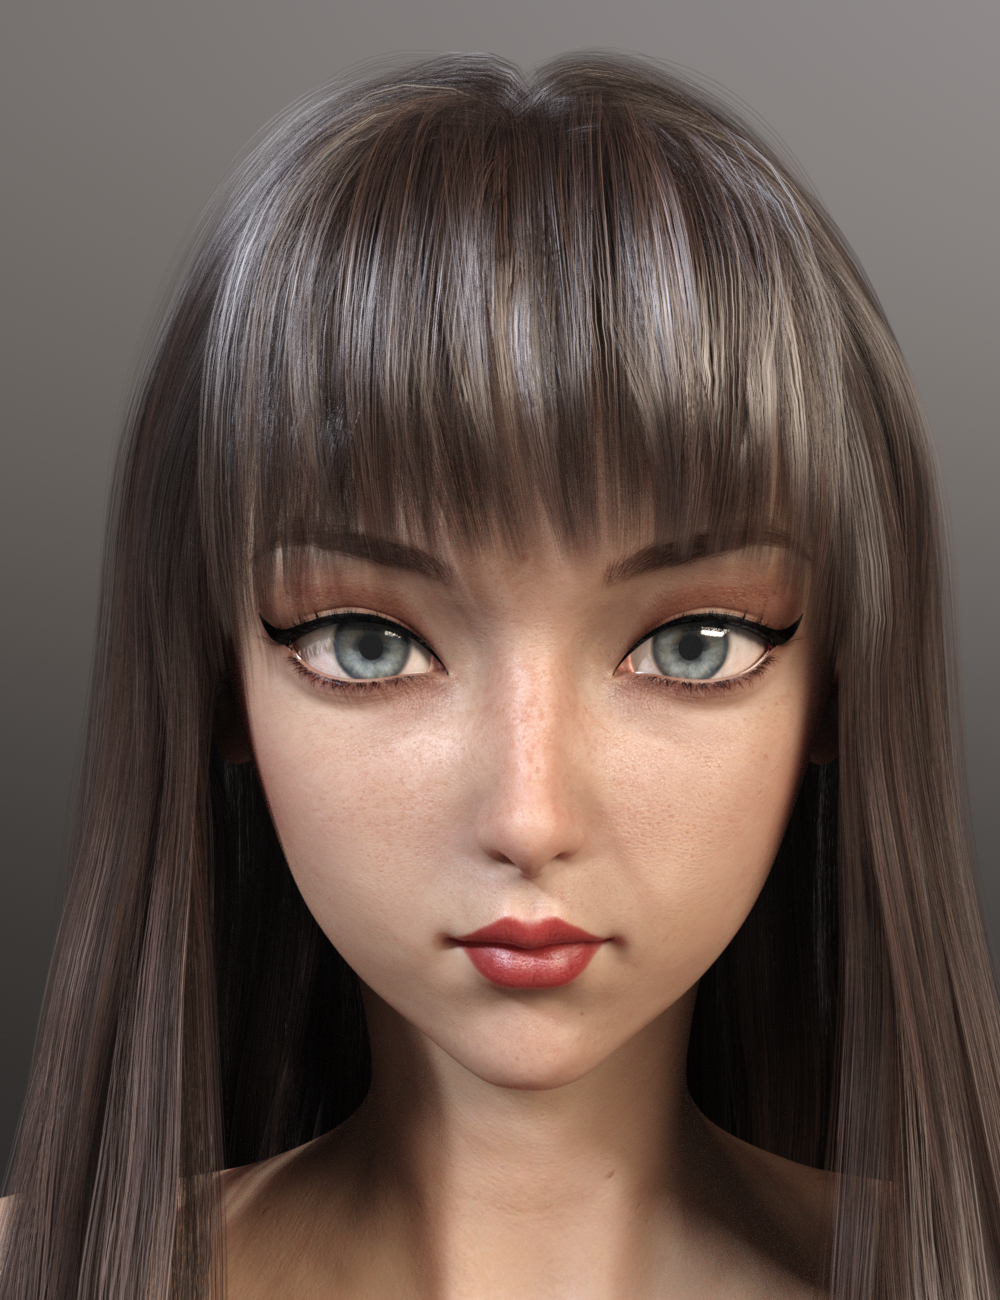 Naoko for Genesis 8 Female by: Ergou, 3D Models by Daz 3D